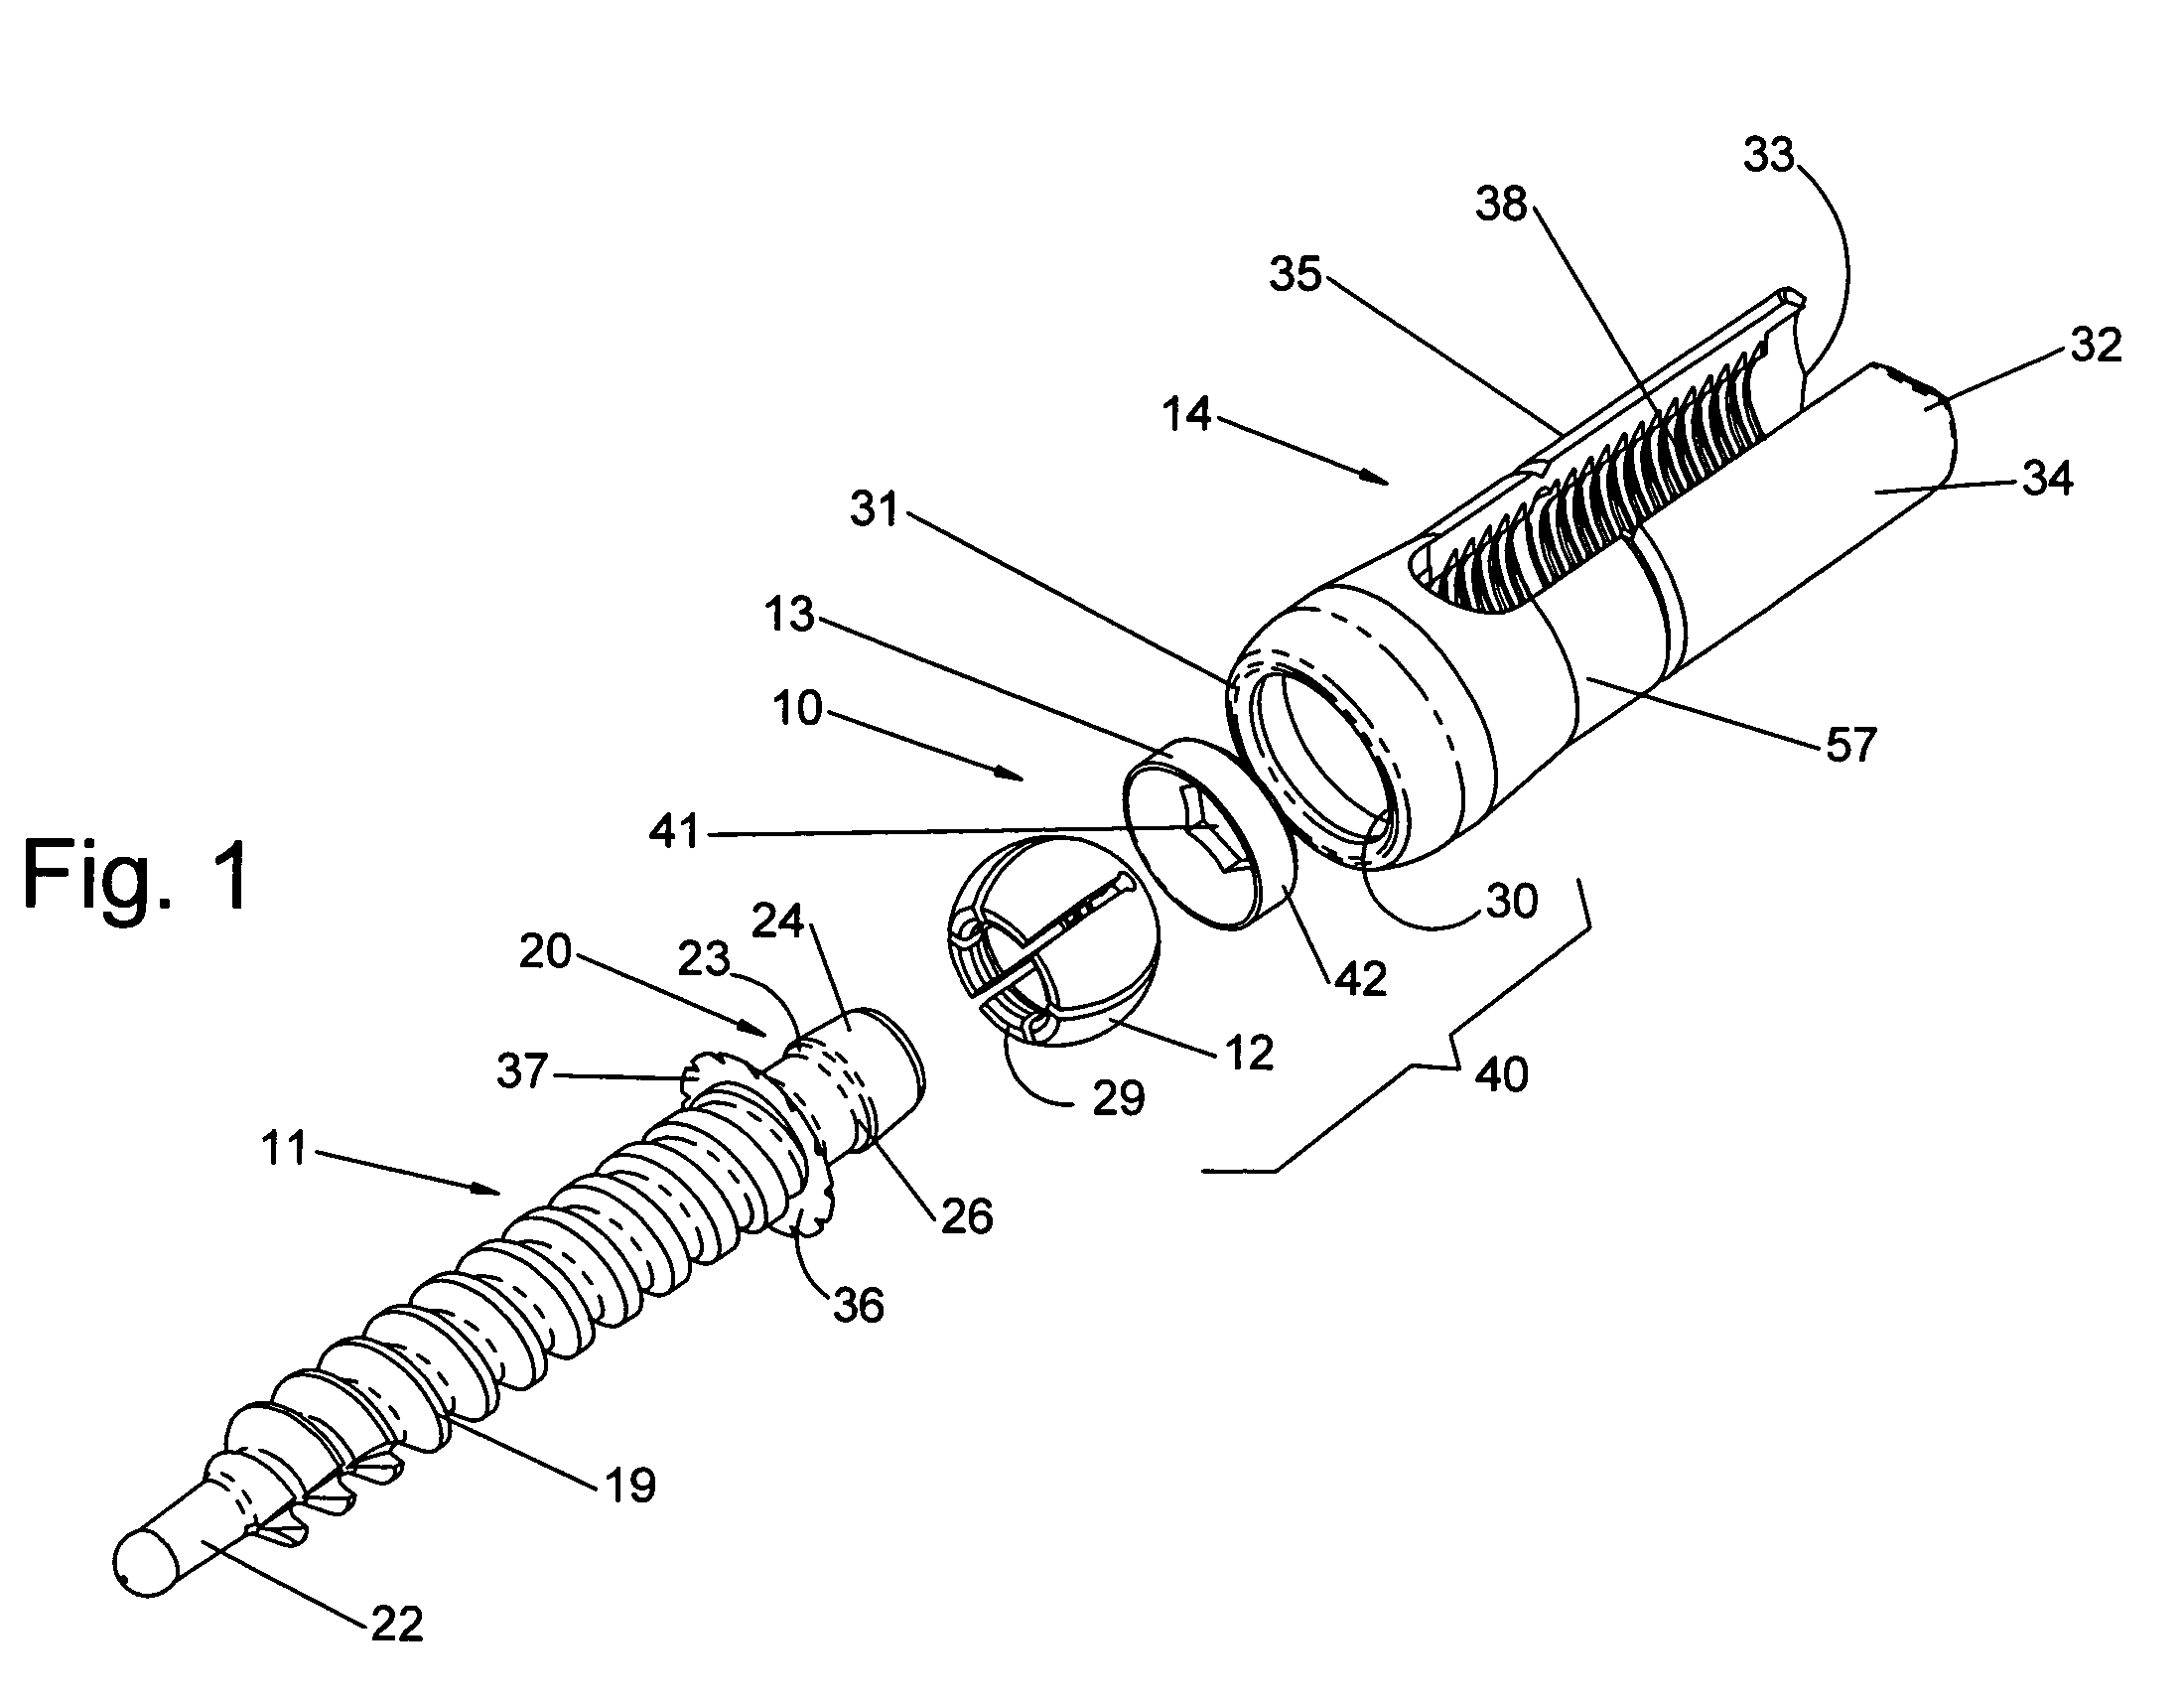 Polyaxial screw